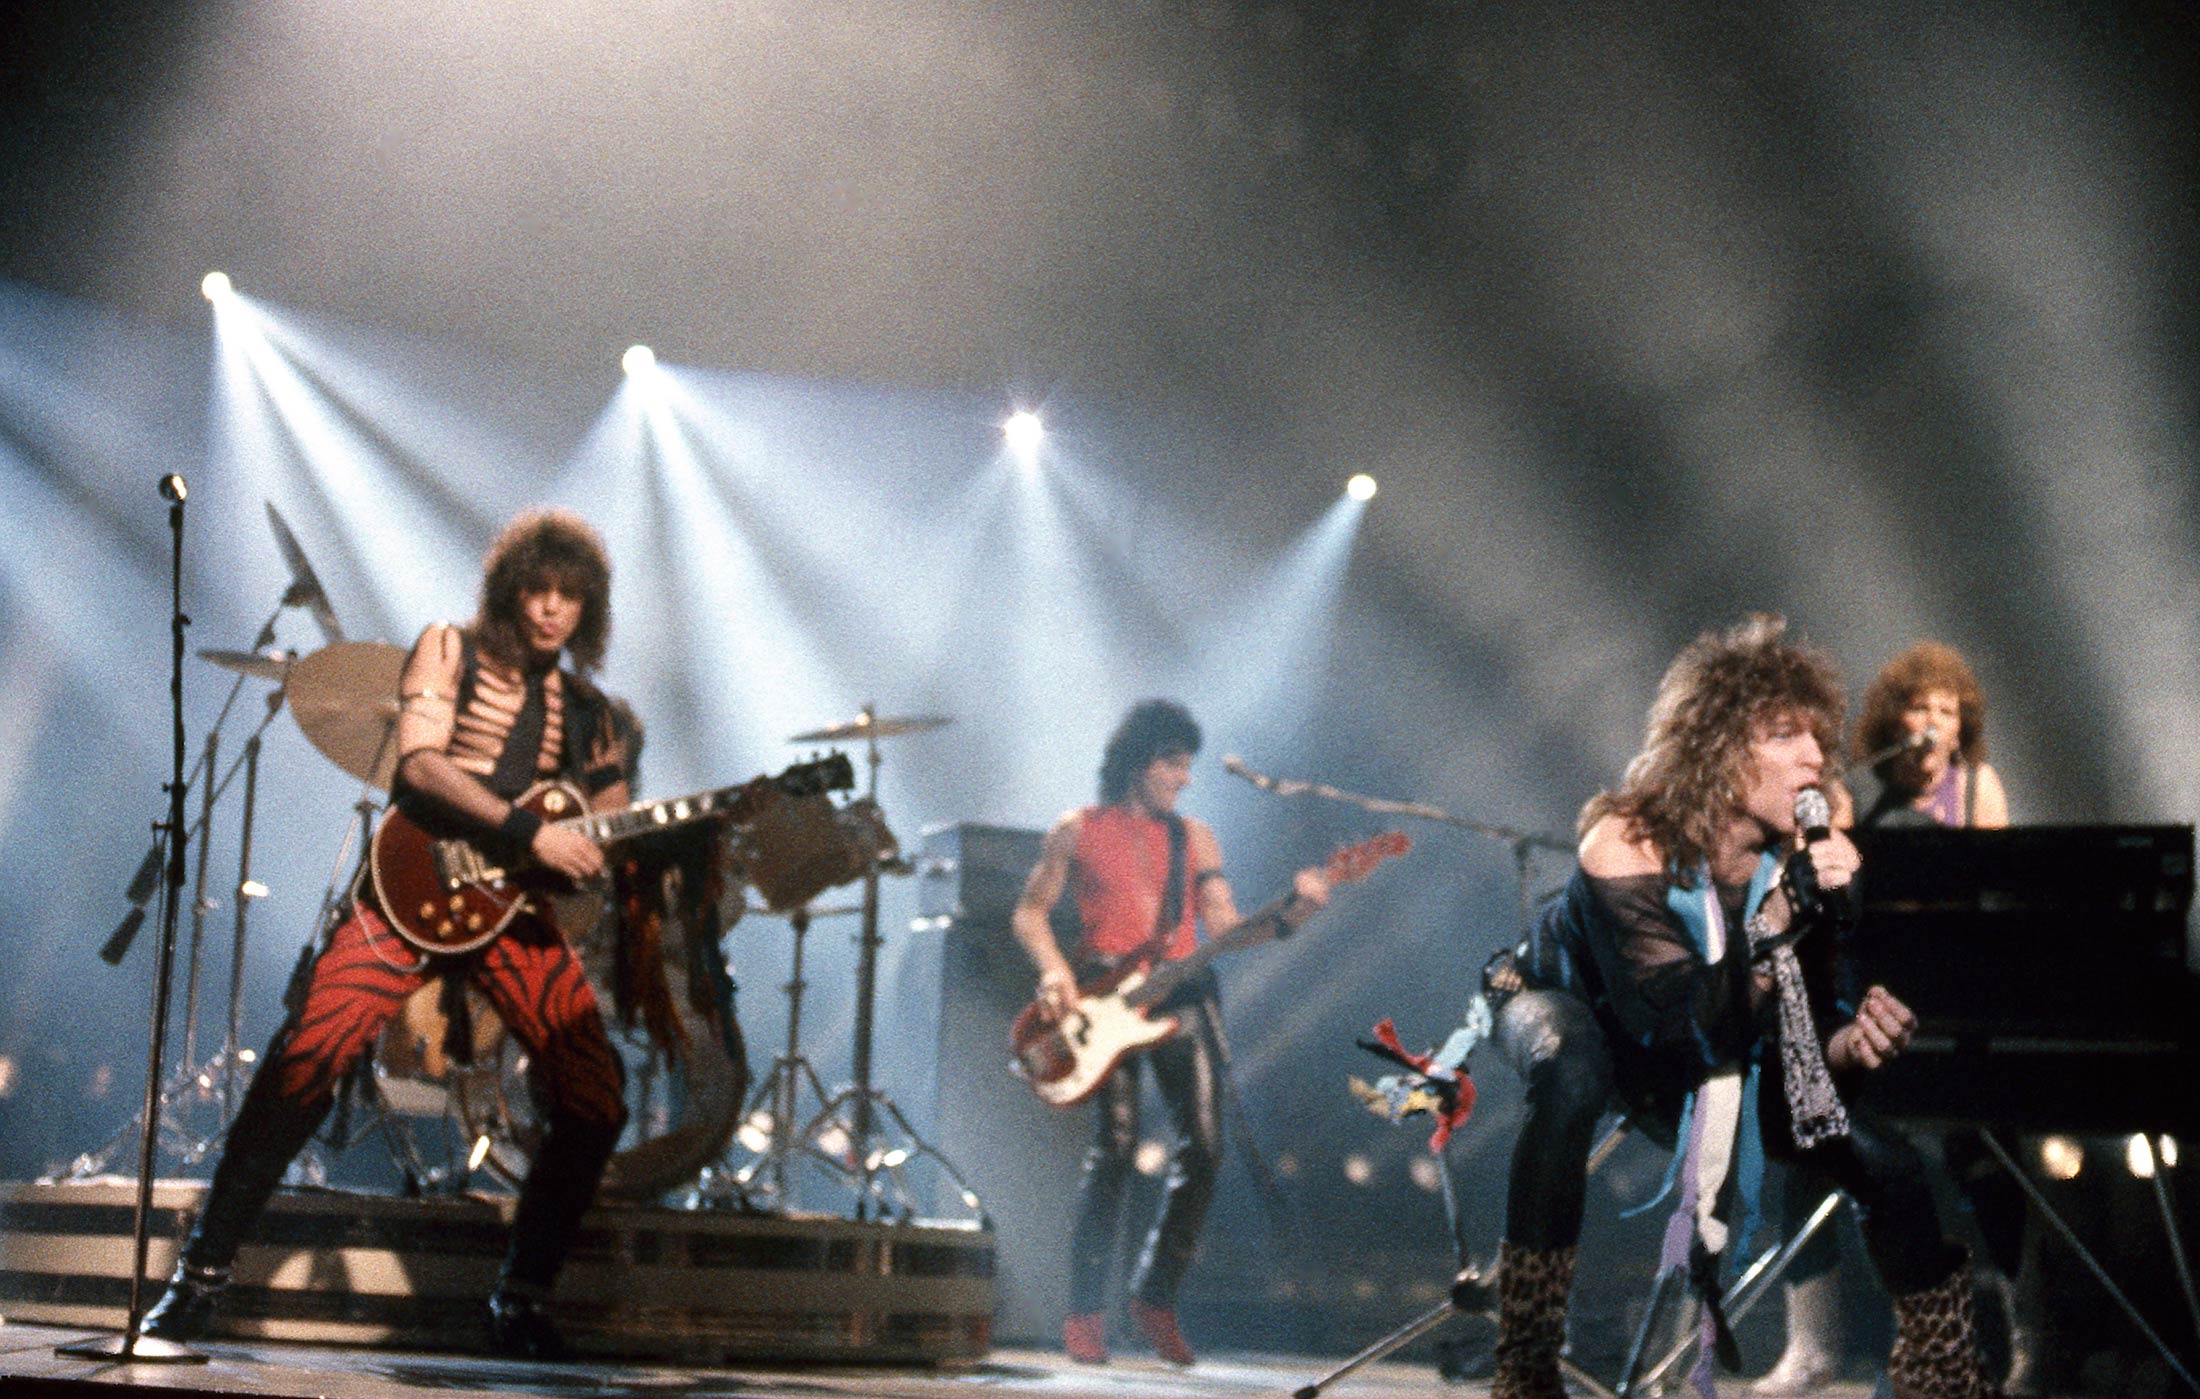 Bon Jovi performing on stage in Los Angeles.